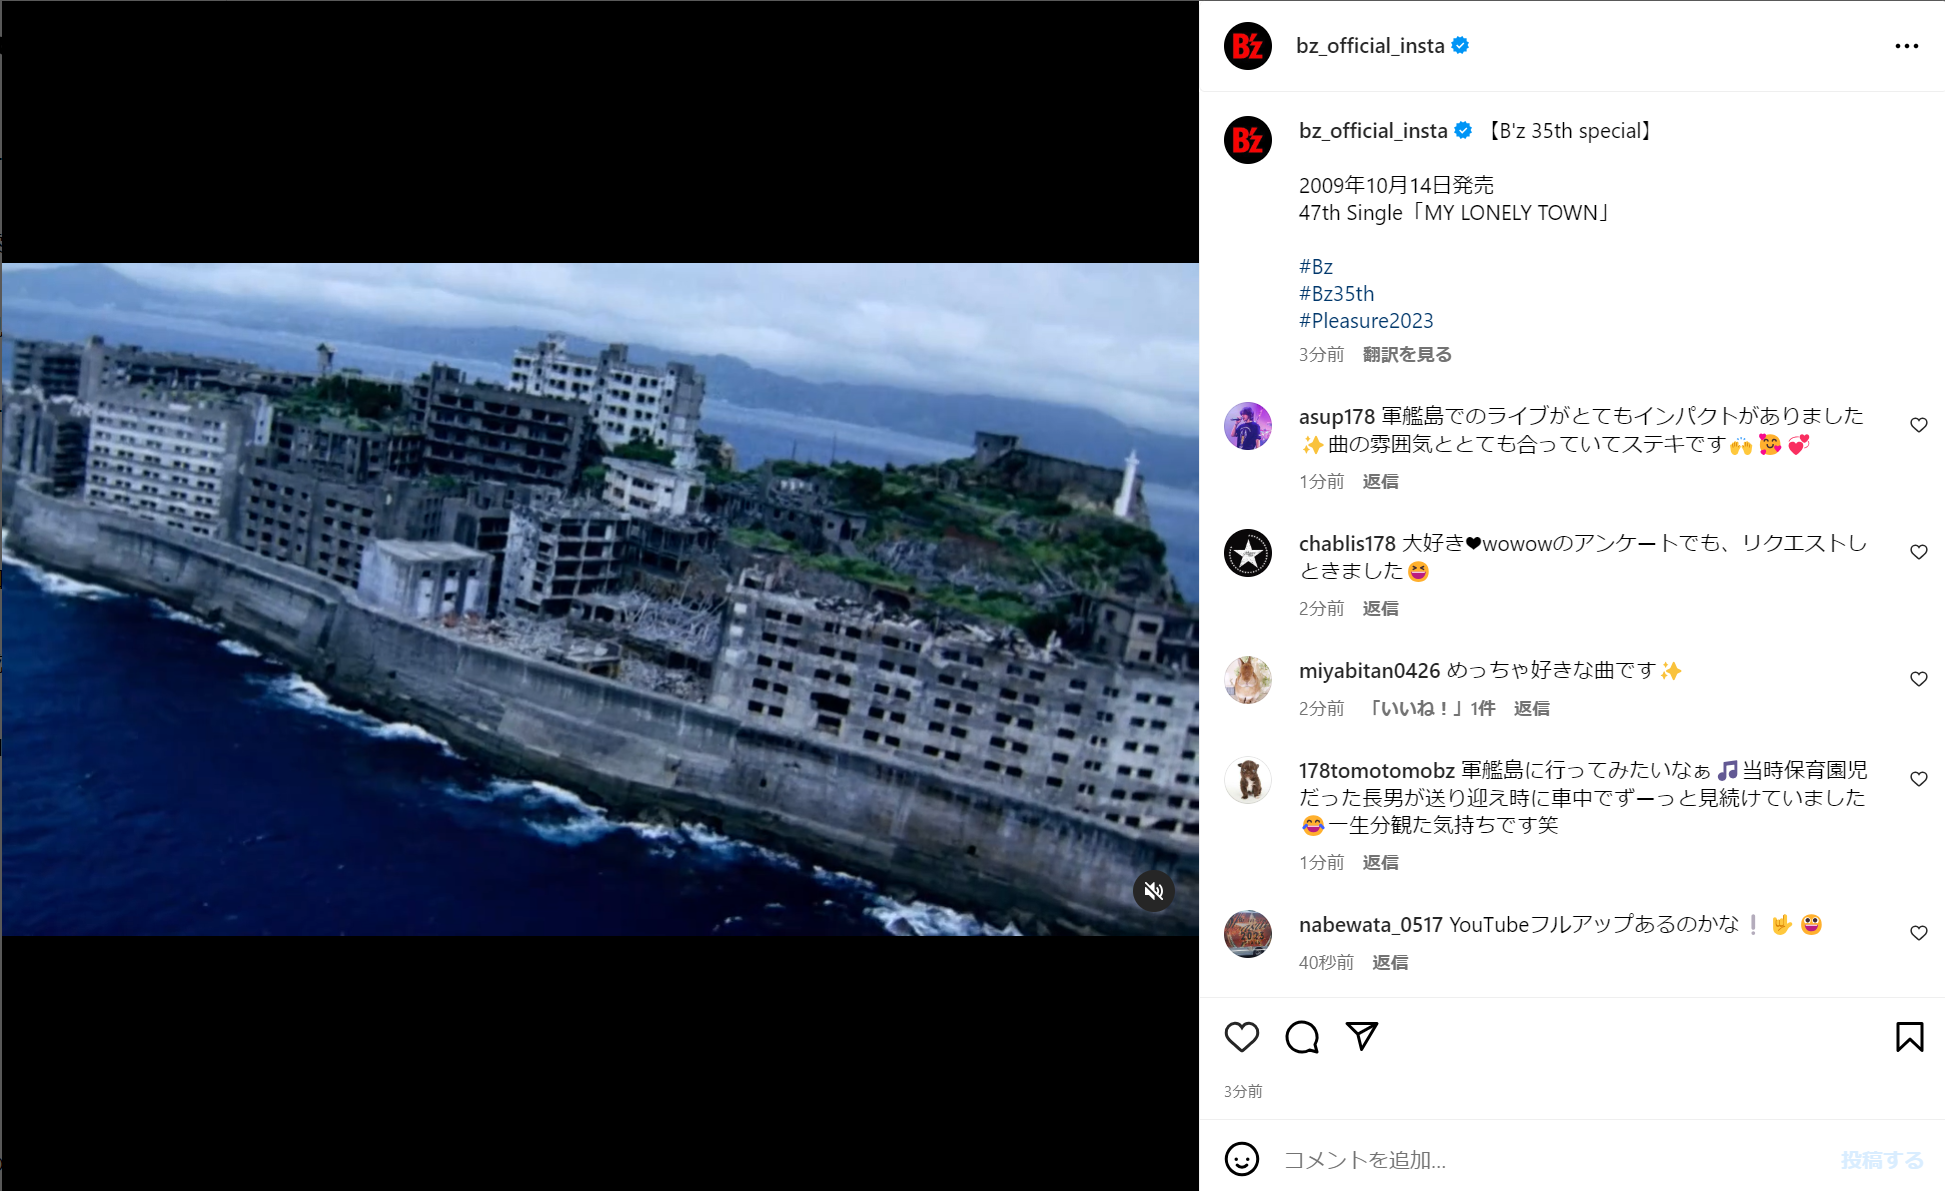 B'z公式Instagramに投稿された「MY LONELY TOWN」のミュージック・ビデオ